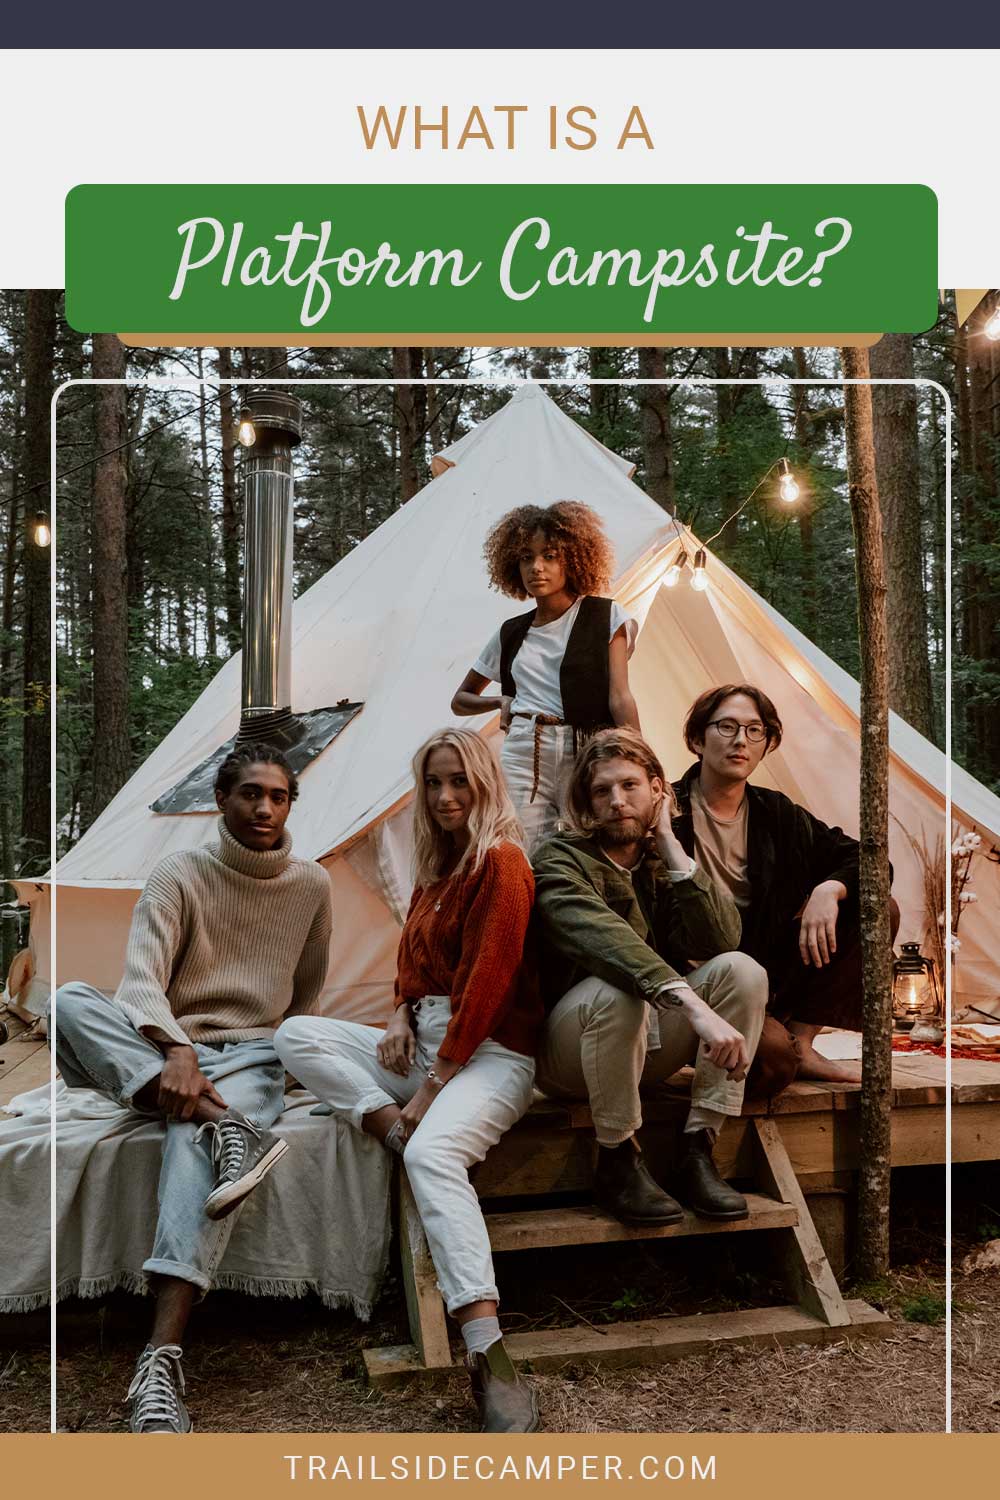 What is a Platform Campsite?